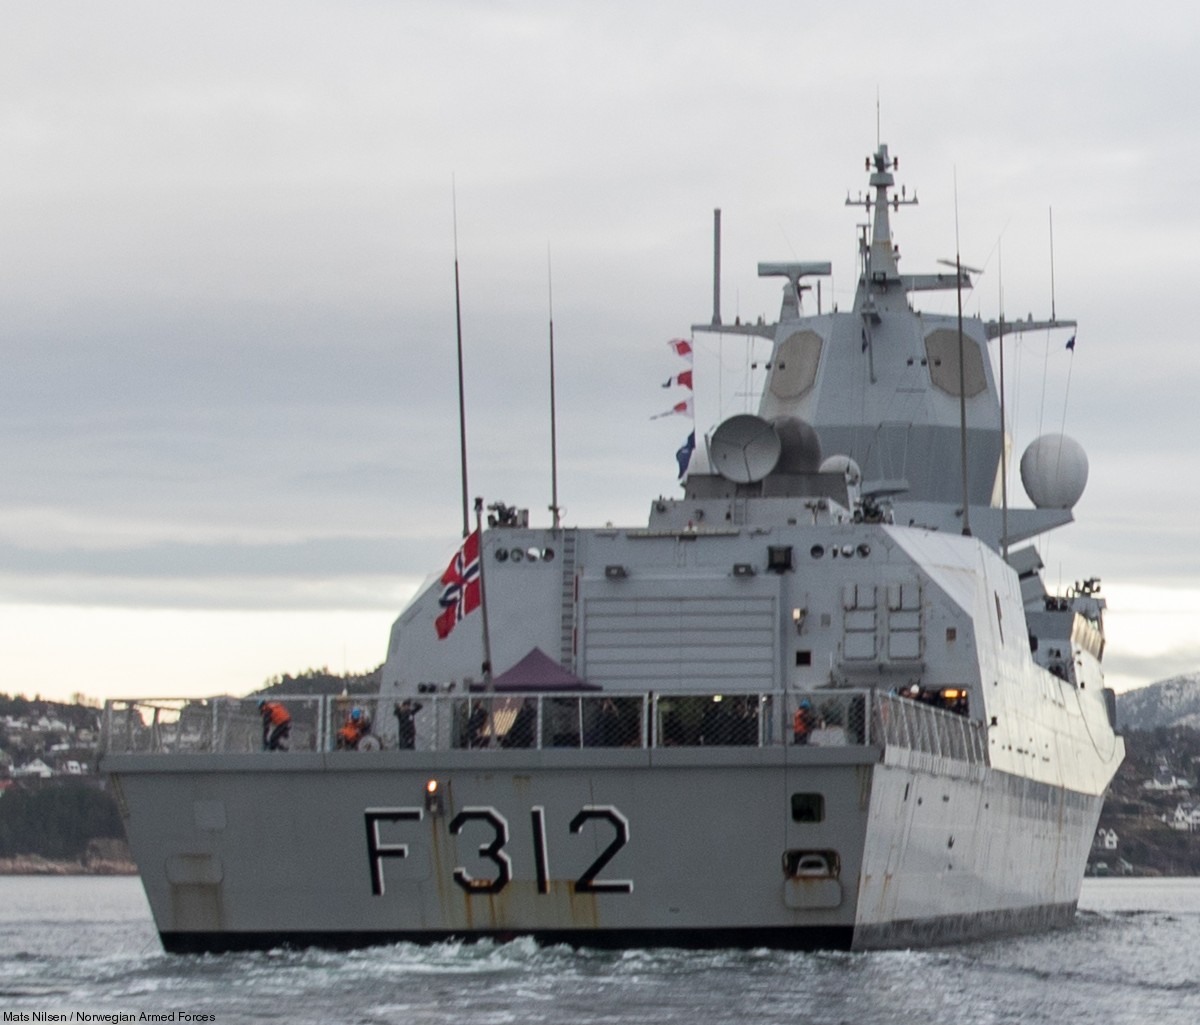 f-312 otto sverdrup hnoms knm fridtjof nansen class frigate royal norwegian navy 04